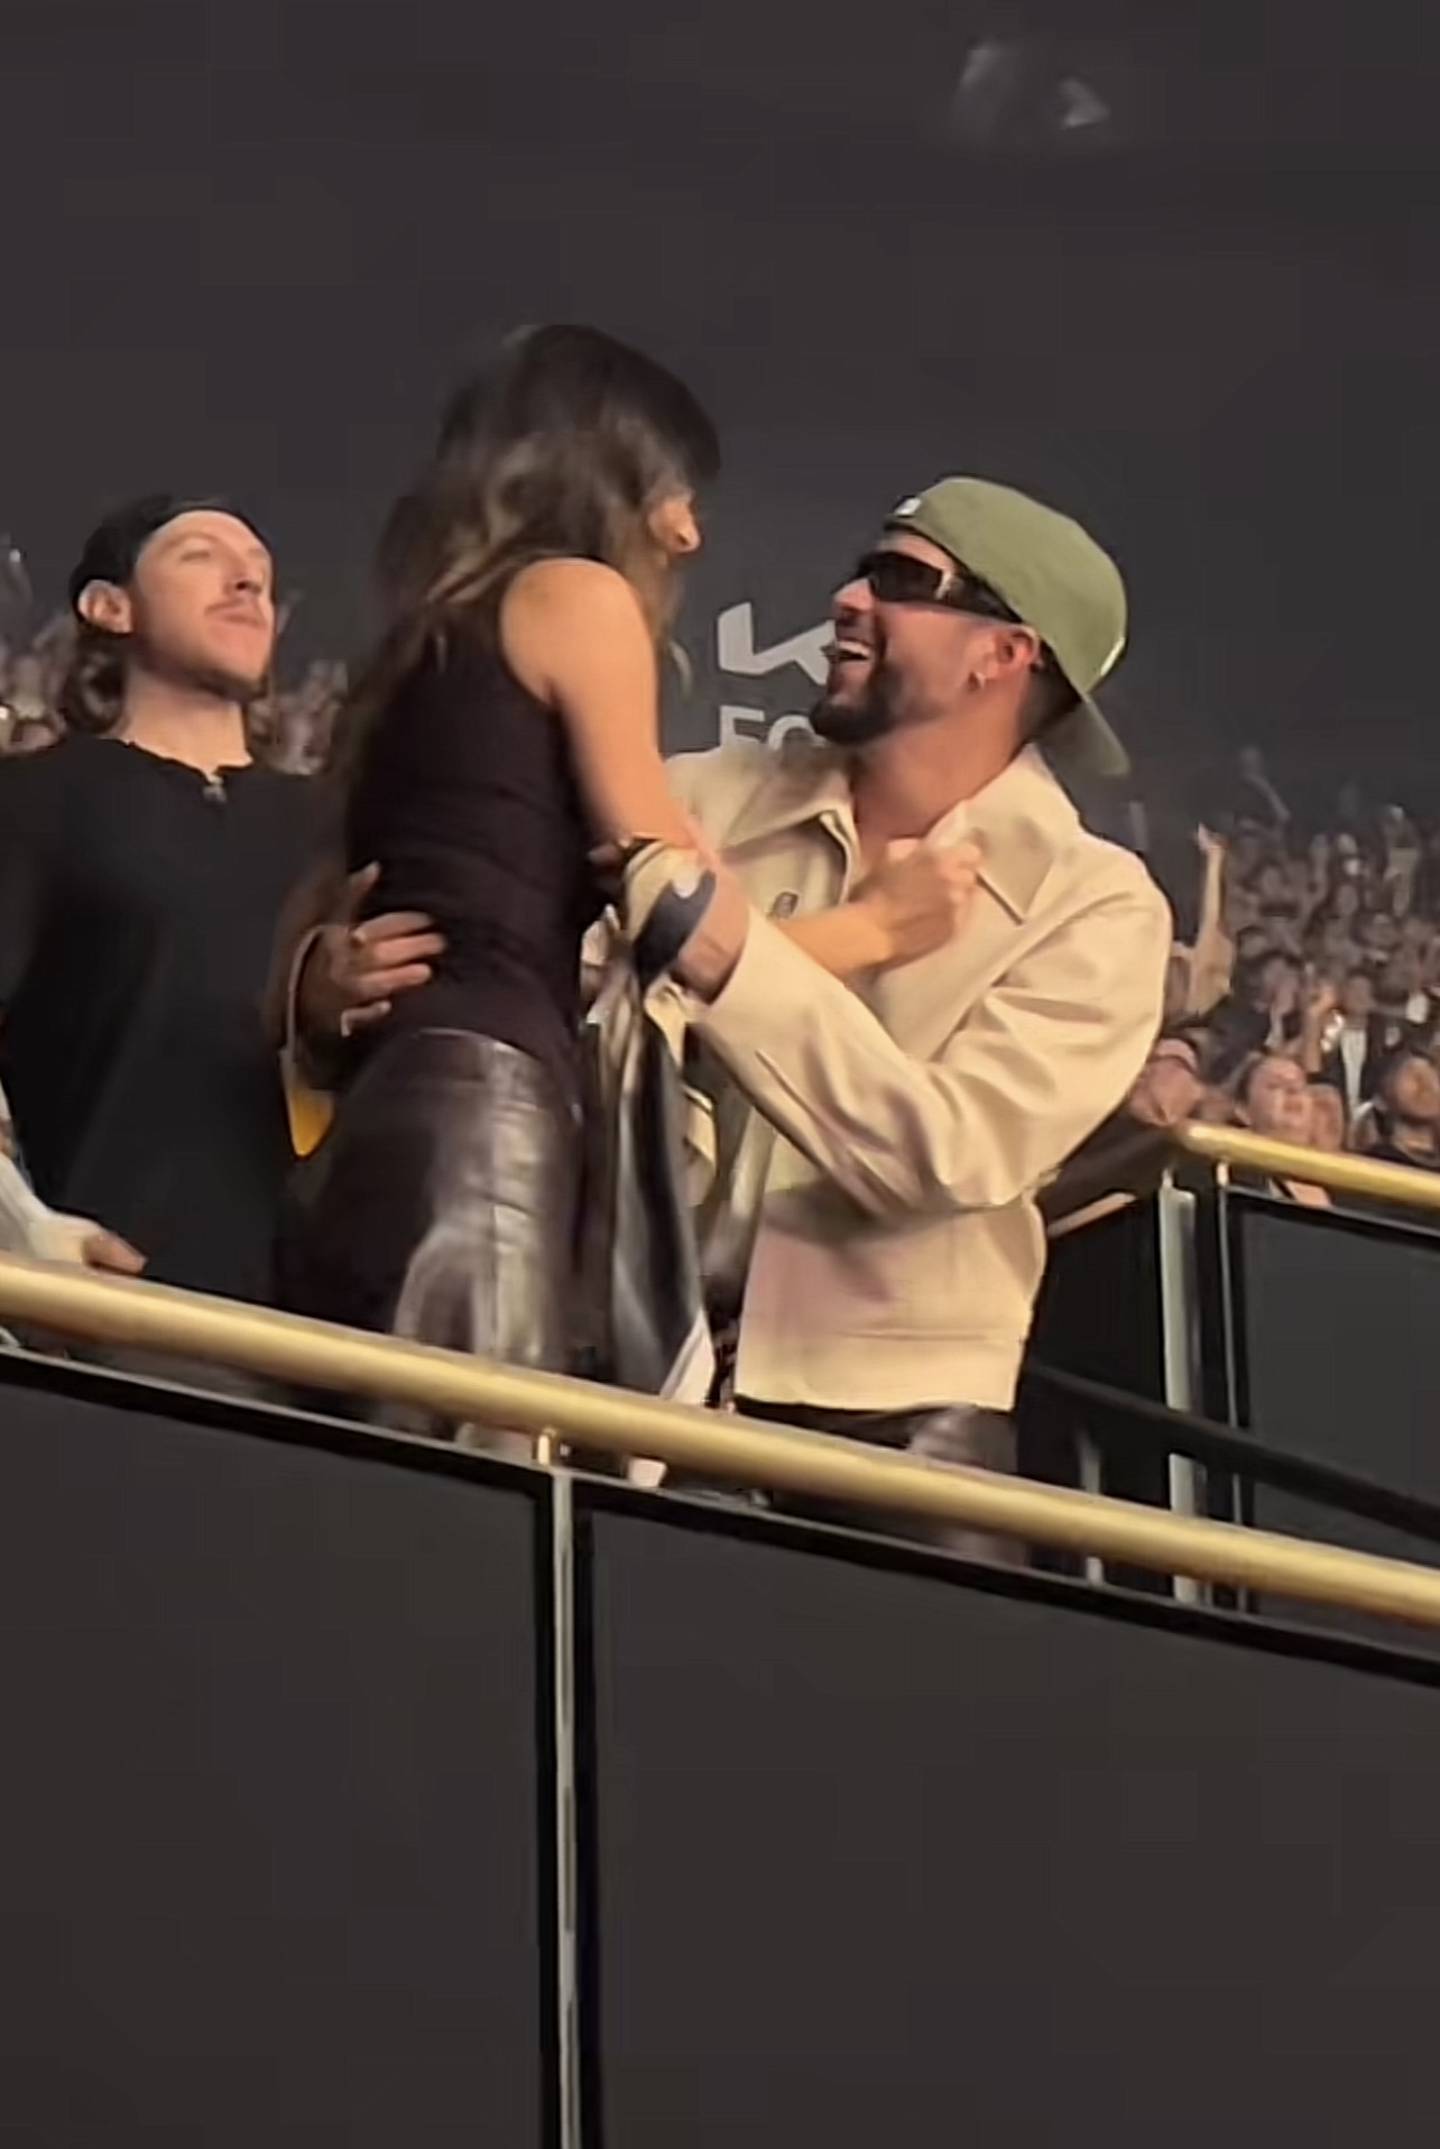 La pareja asistió a concierto de Drake